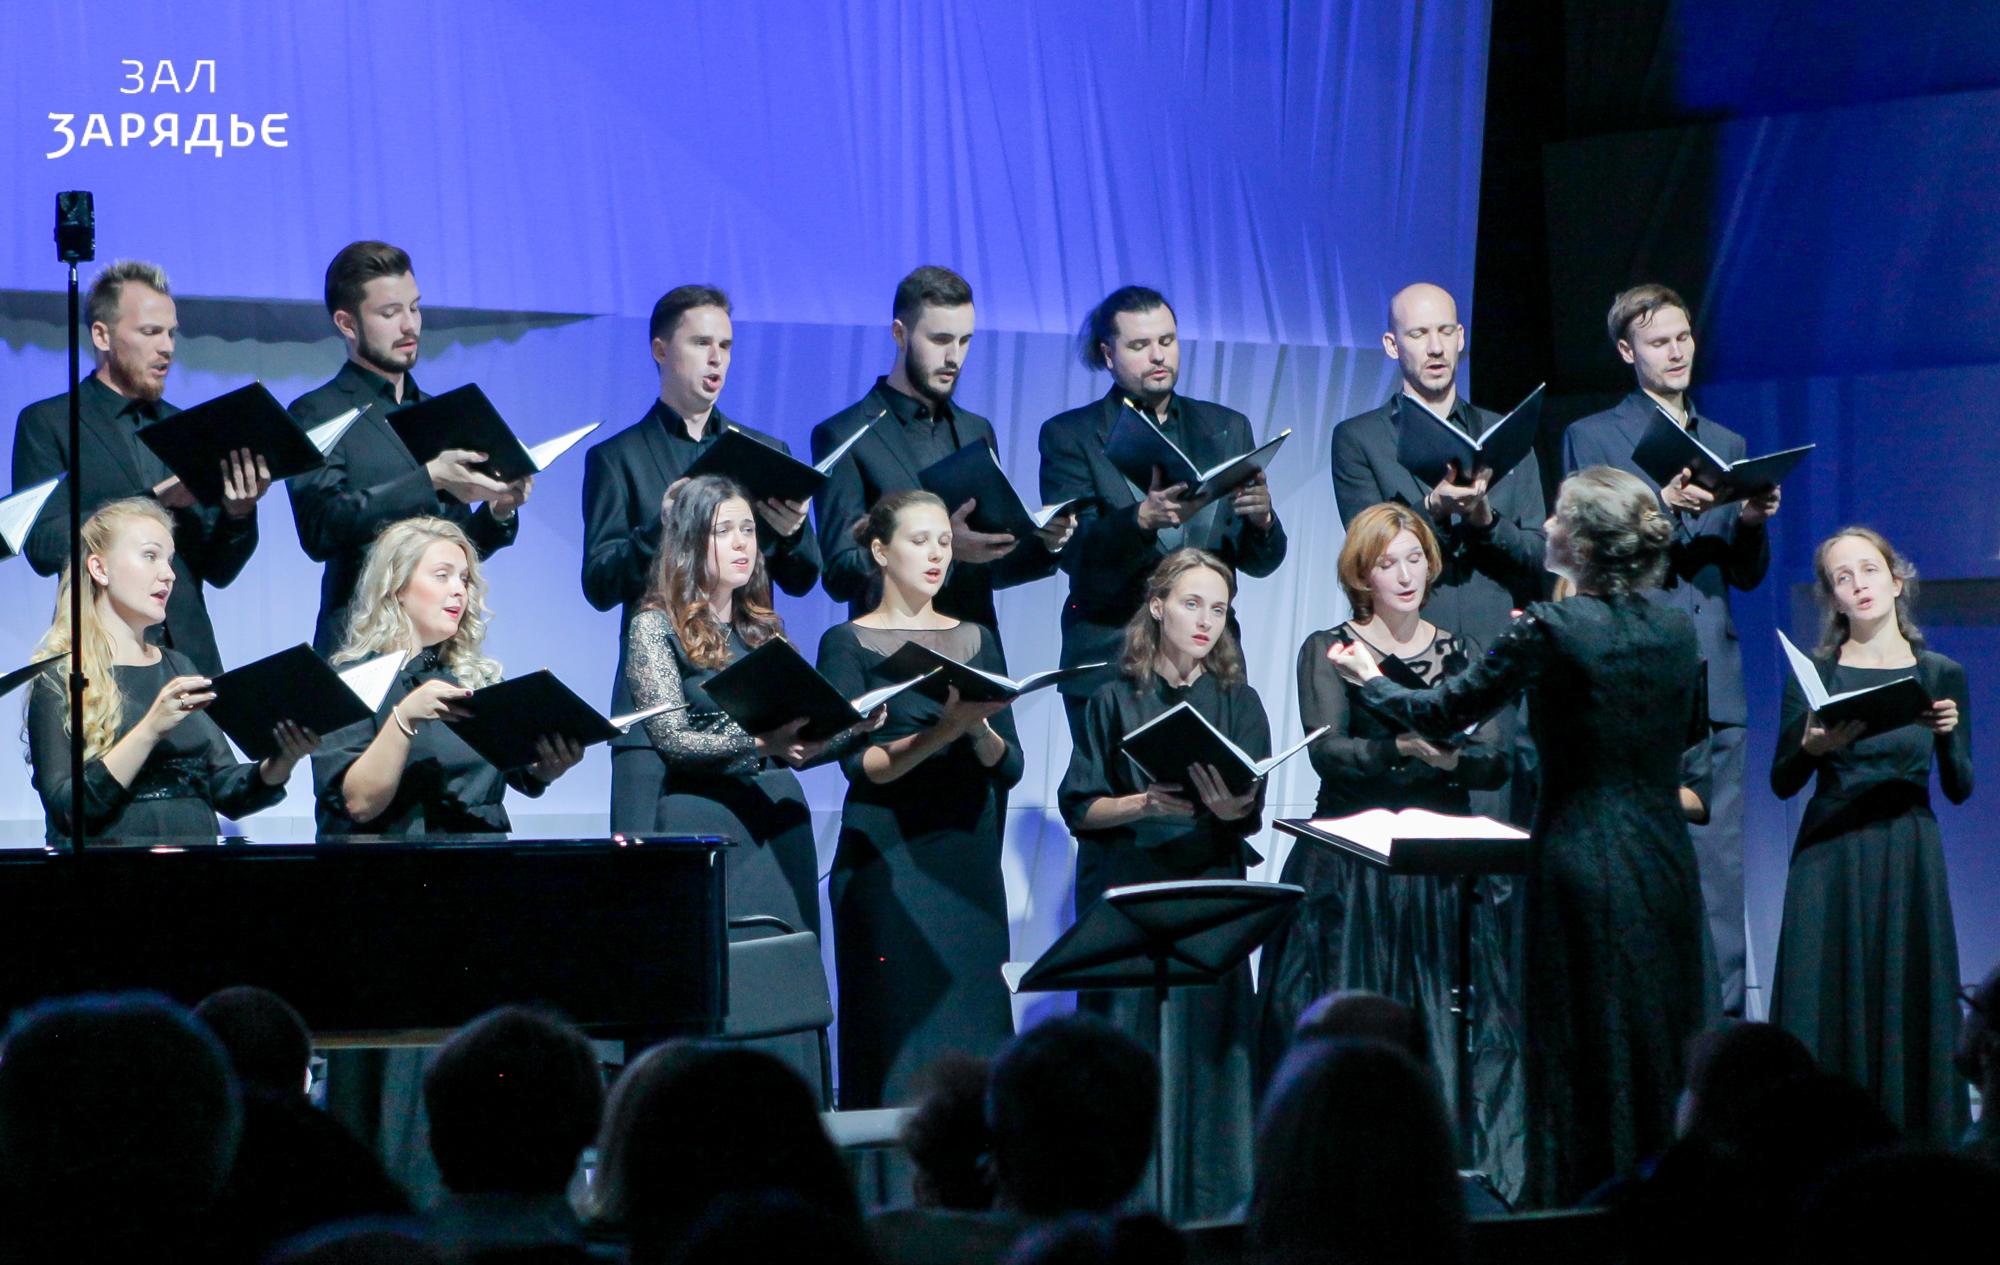 British Choir Music of 20-21st centuries  INTRADA vocal band  Conductor – Stephen Layton